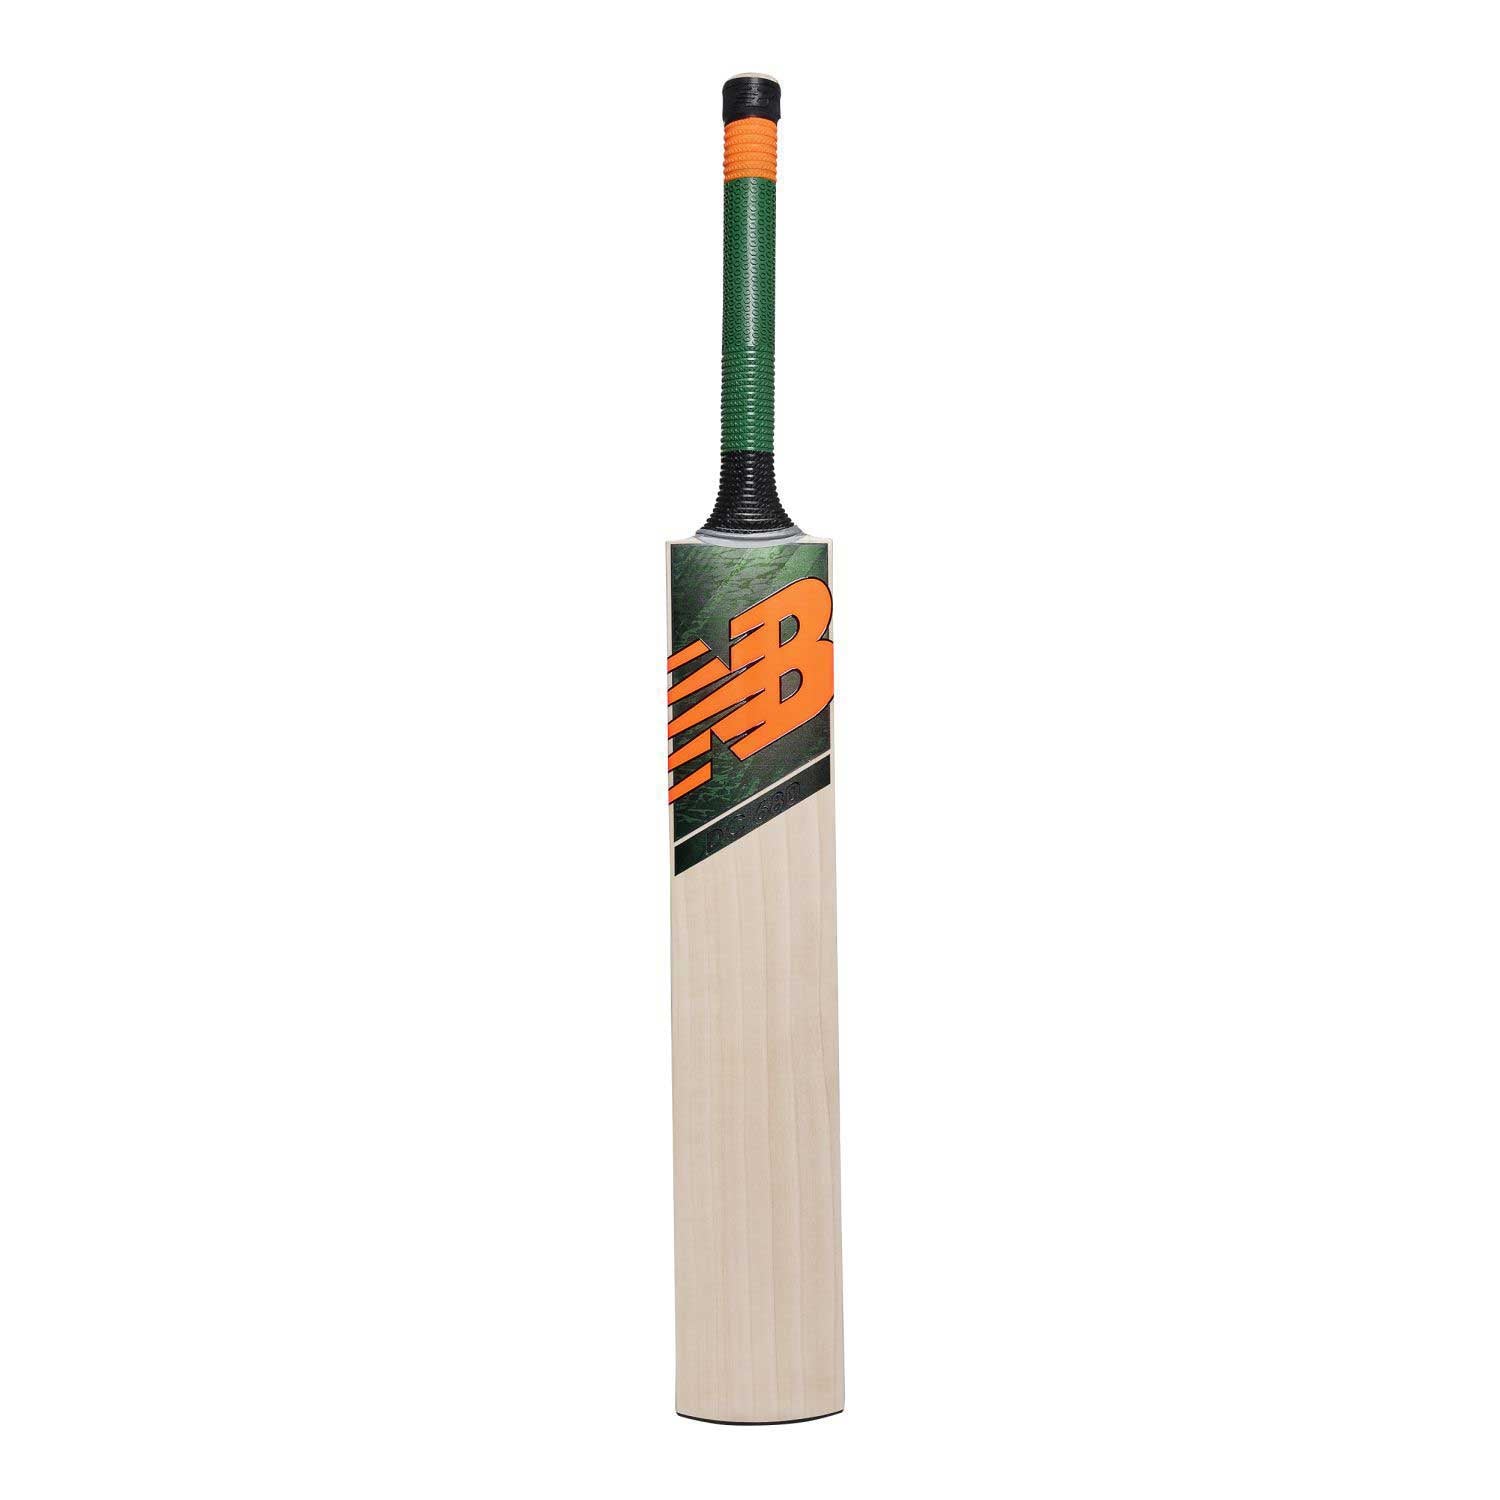 New Balance DC680 Junior Cricket Bat